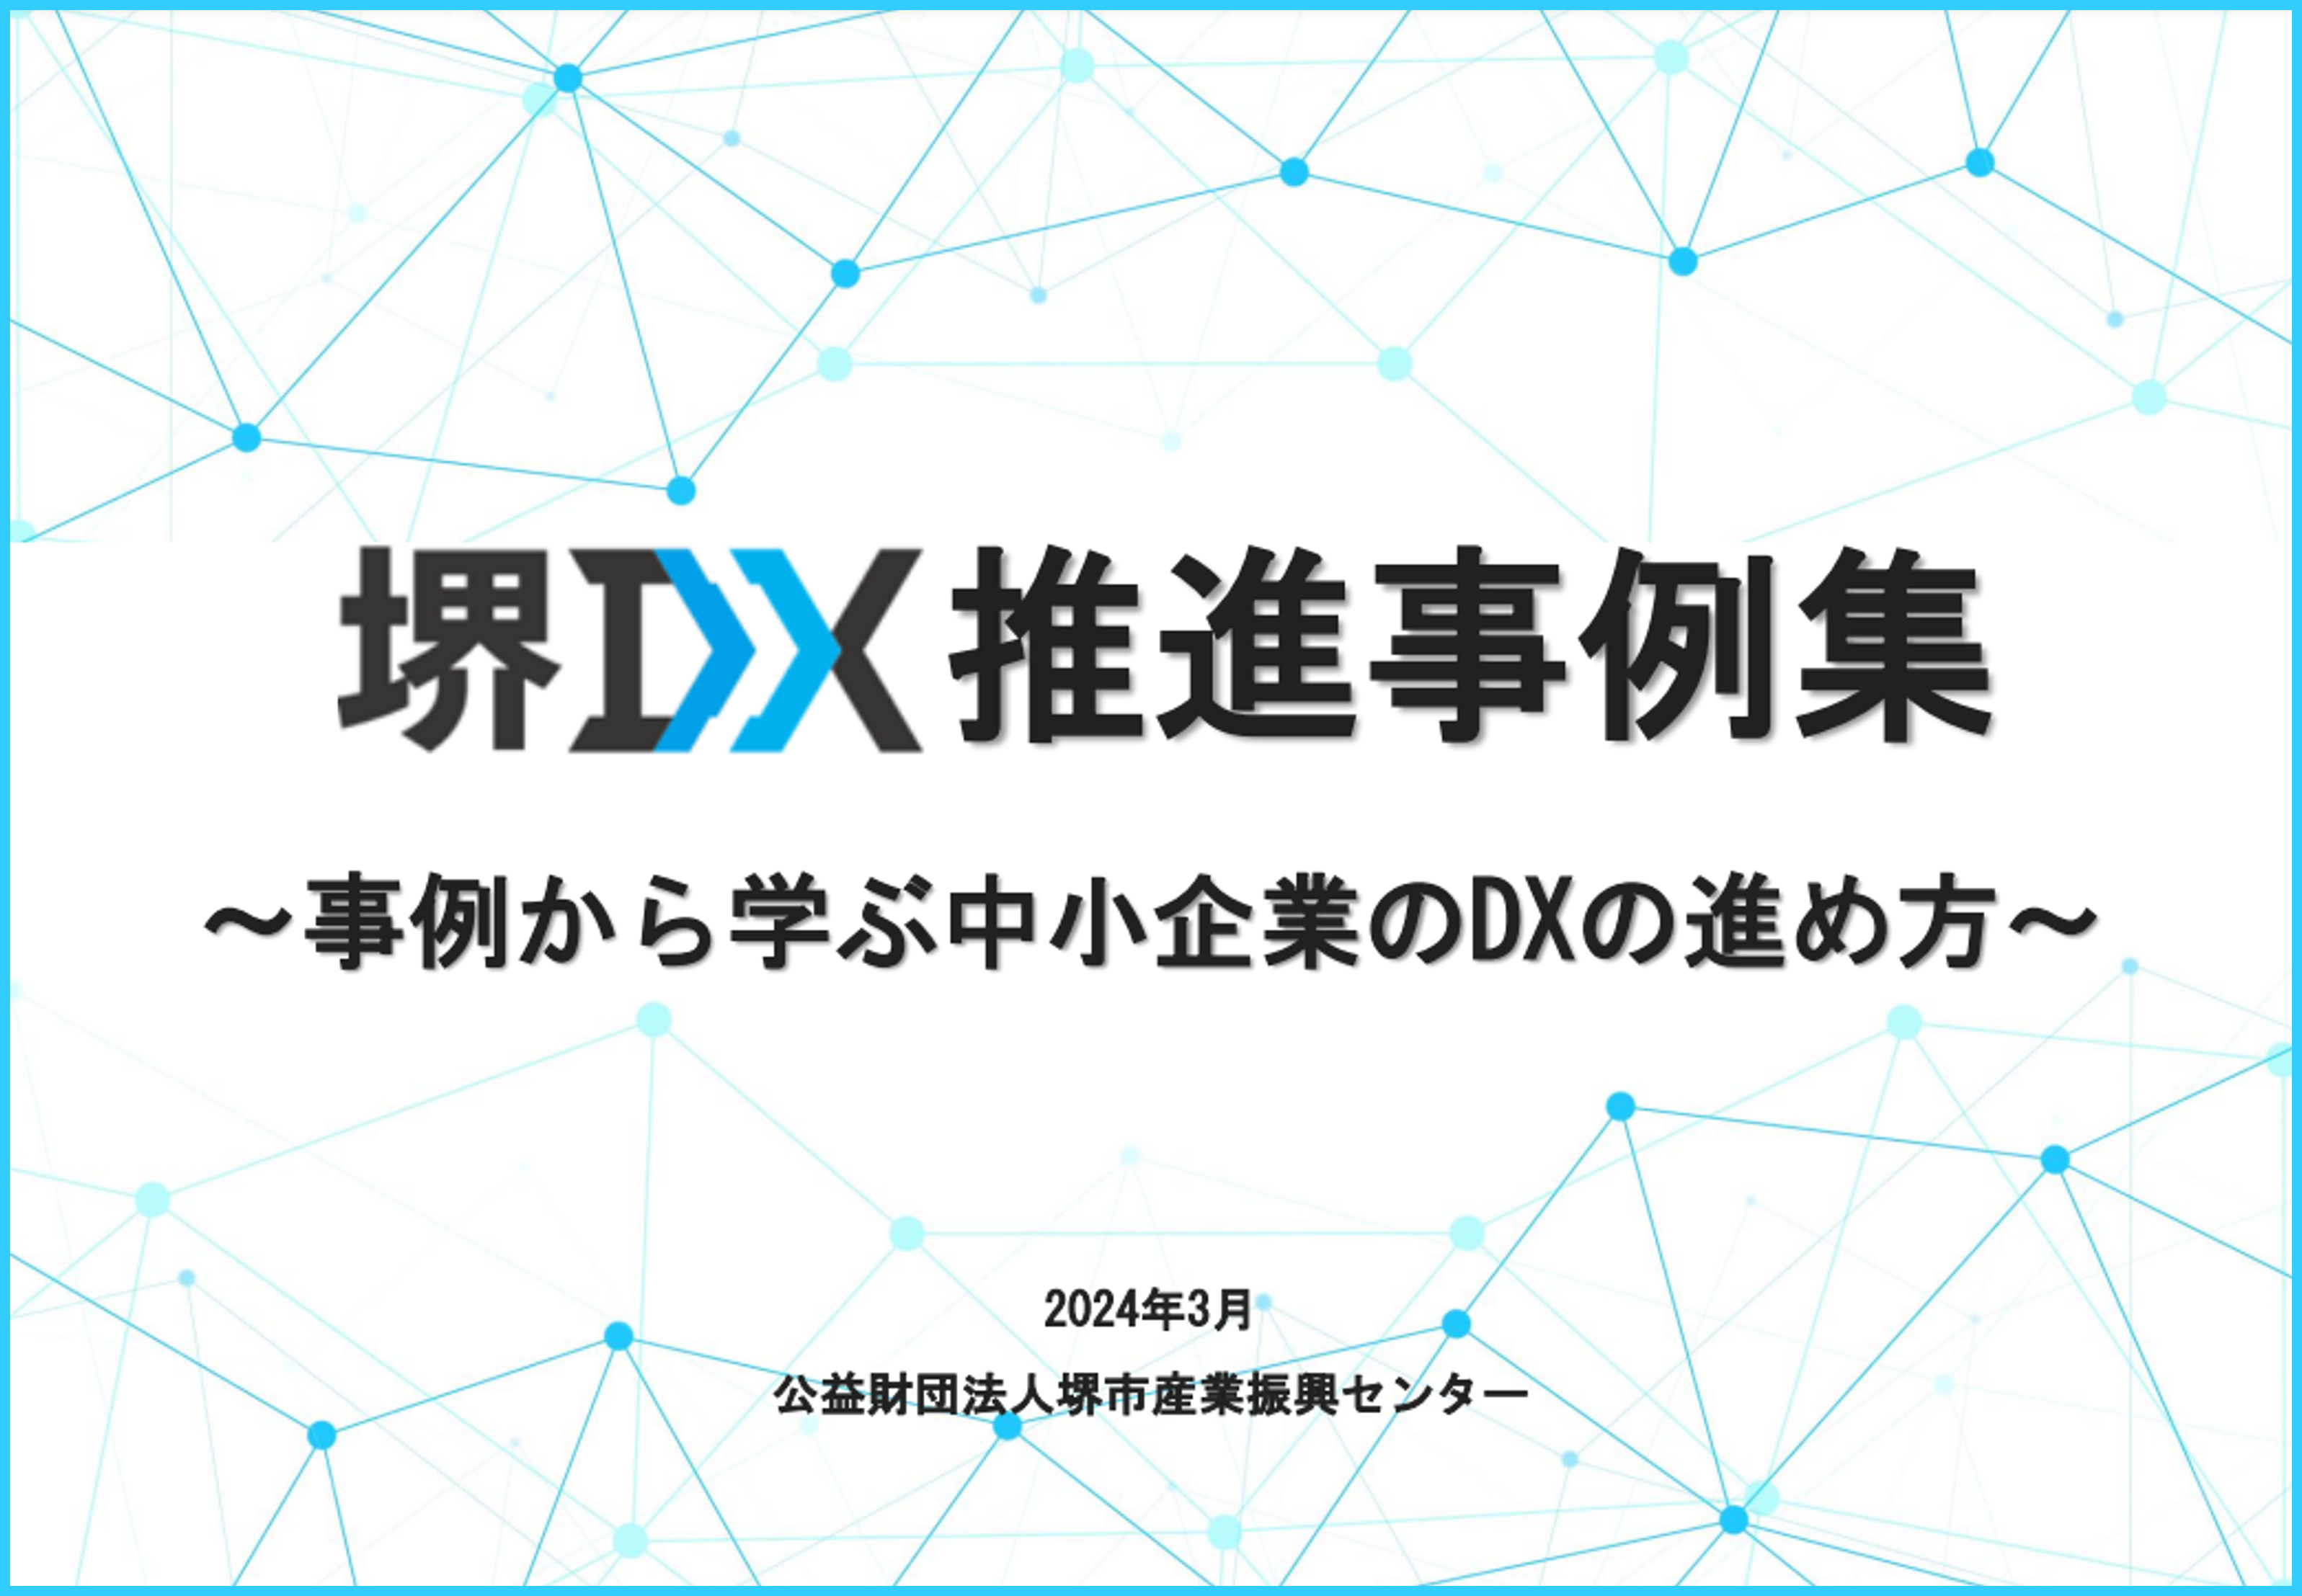 DX推進事例集.png